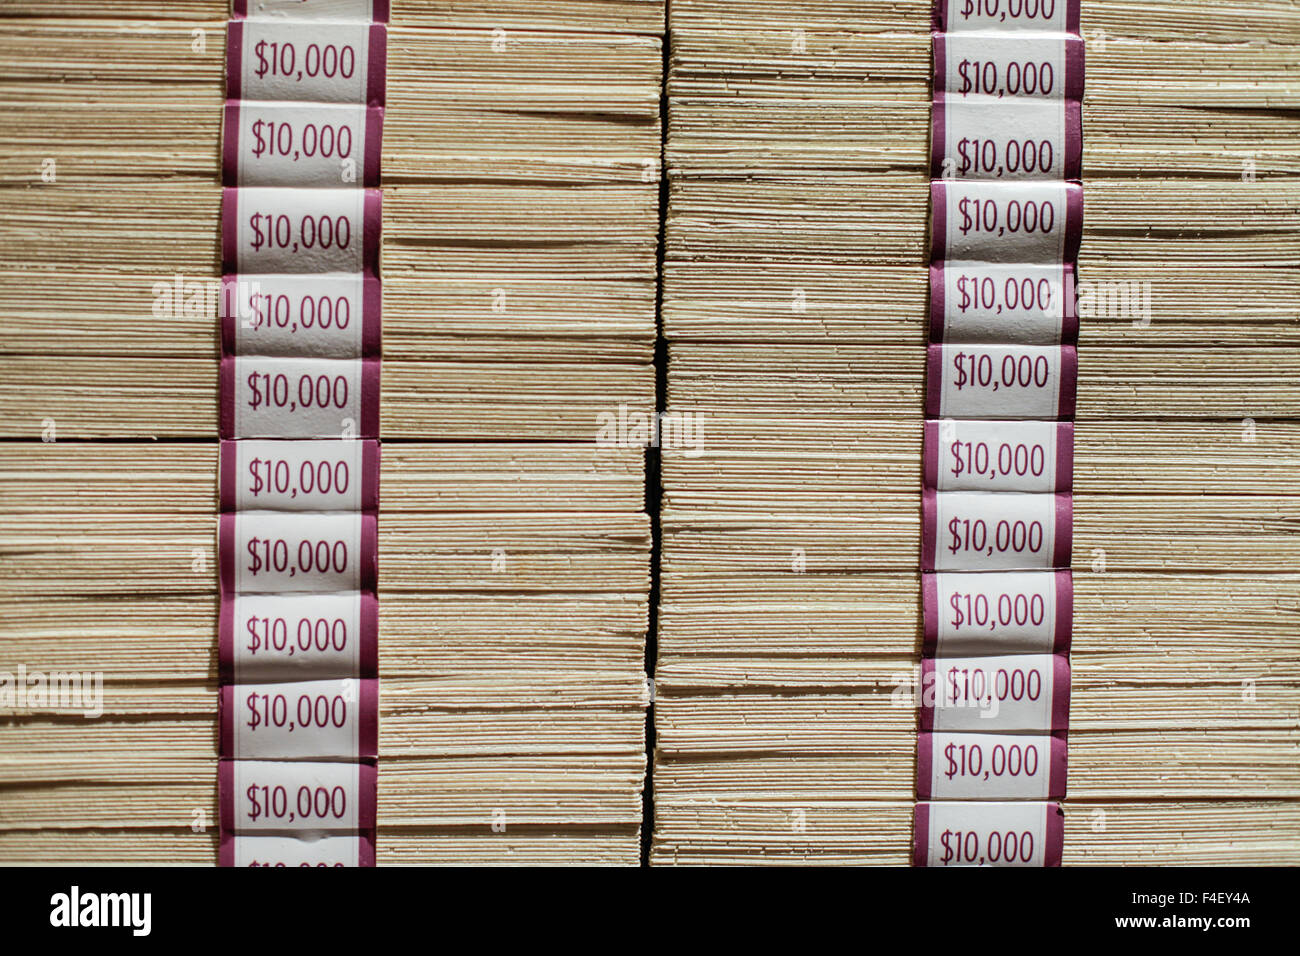 Prints of money at the Mob Museum, Las Vegas, Nevada. USA Stock Photo